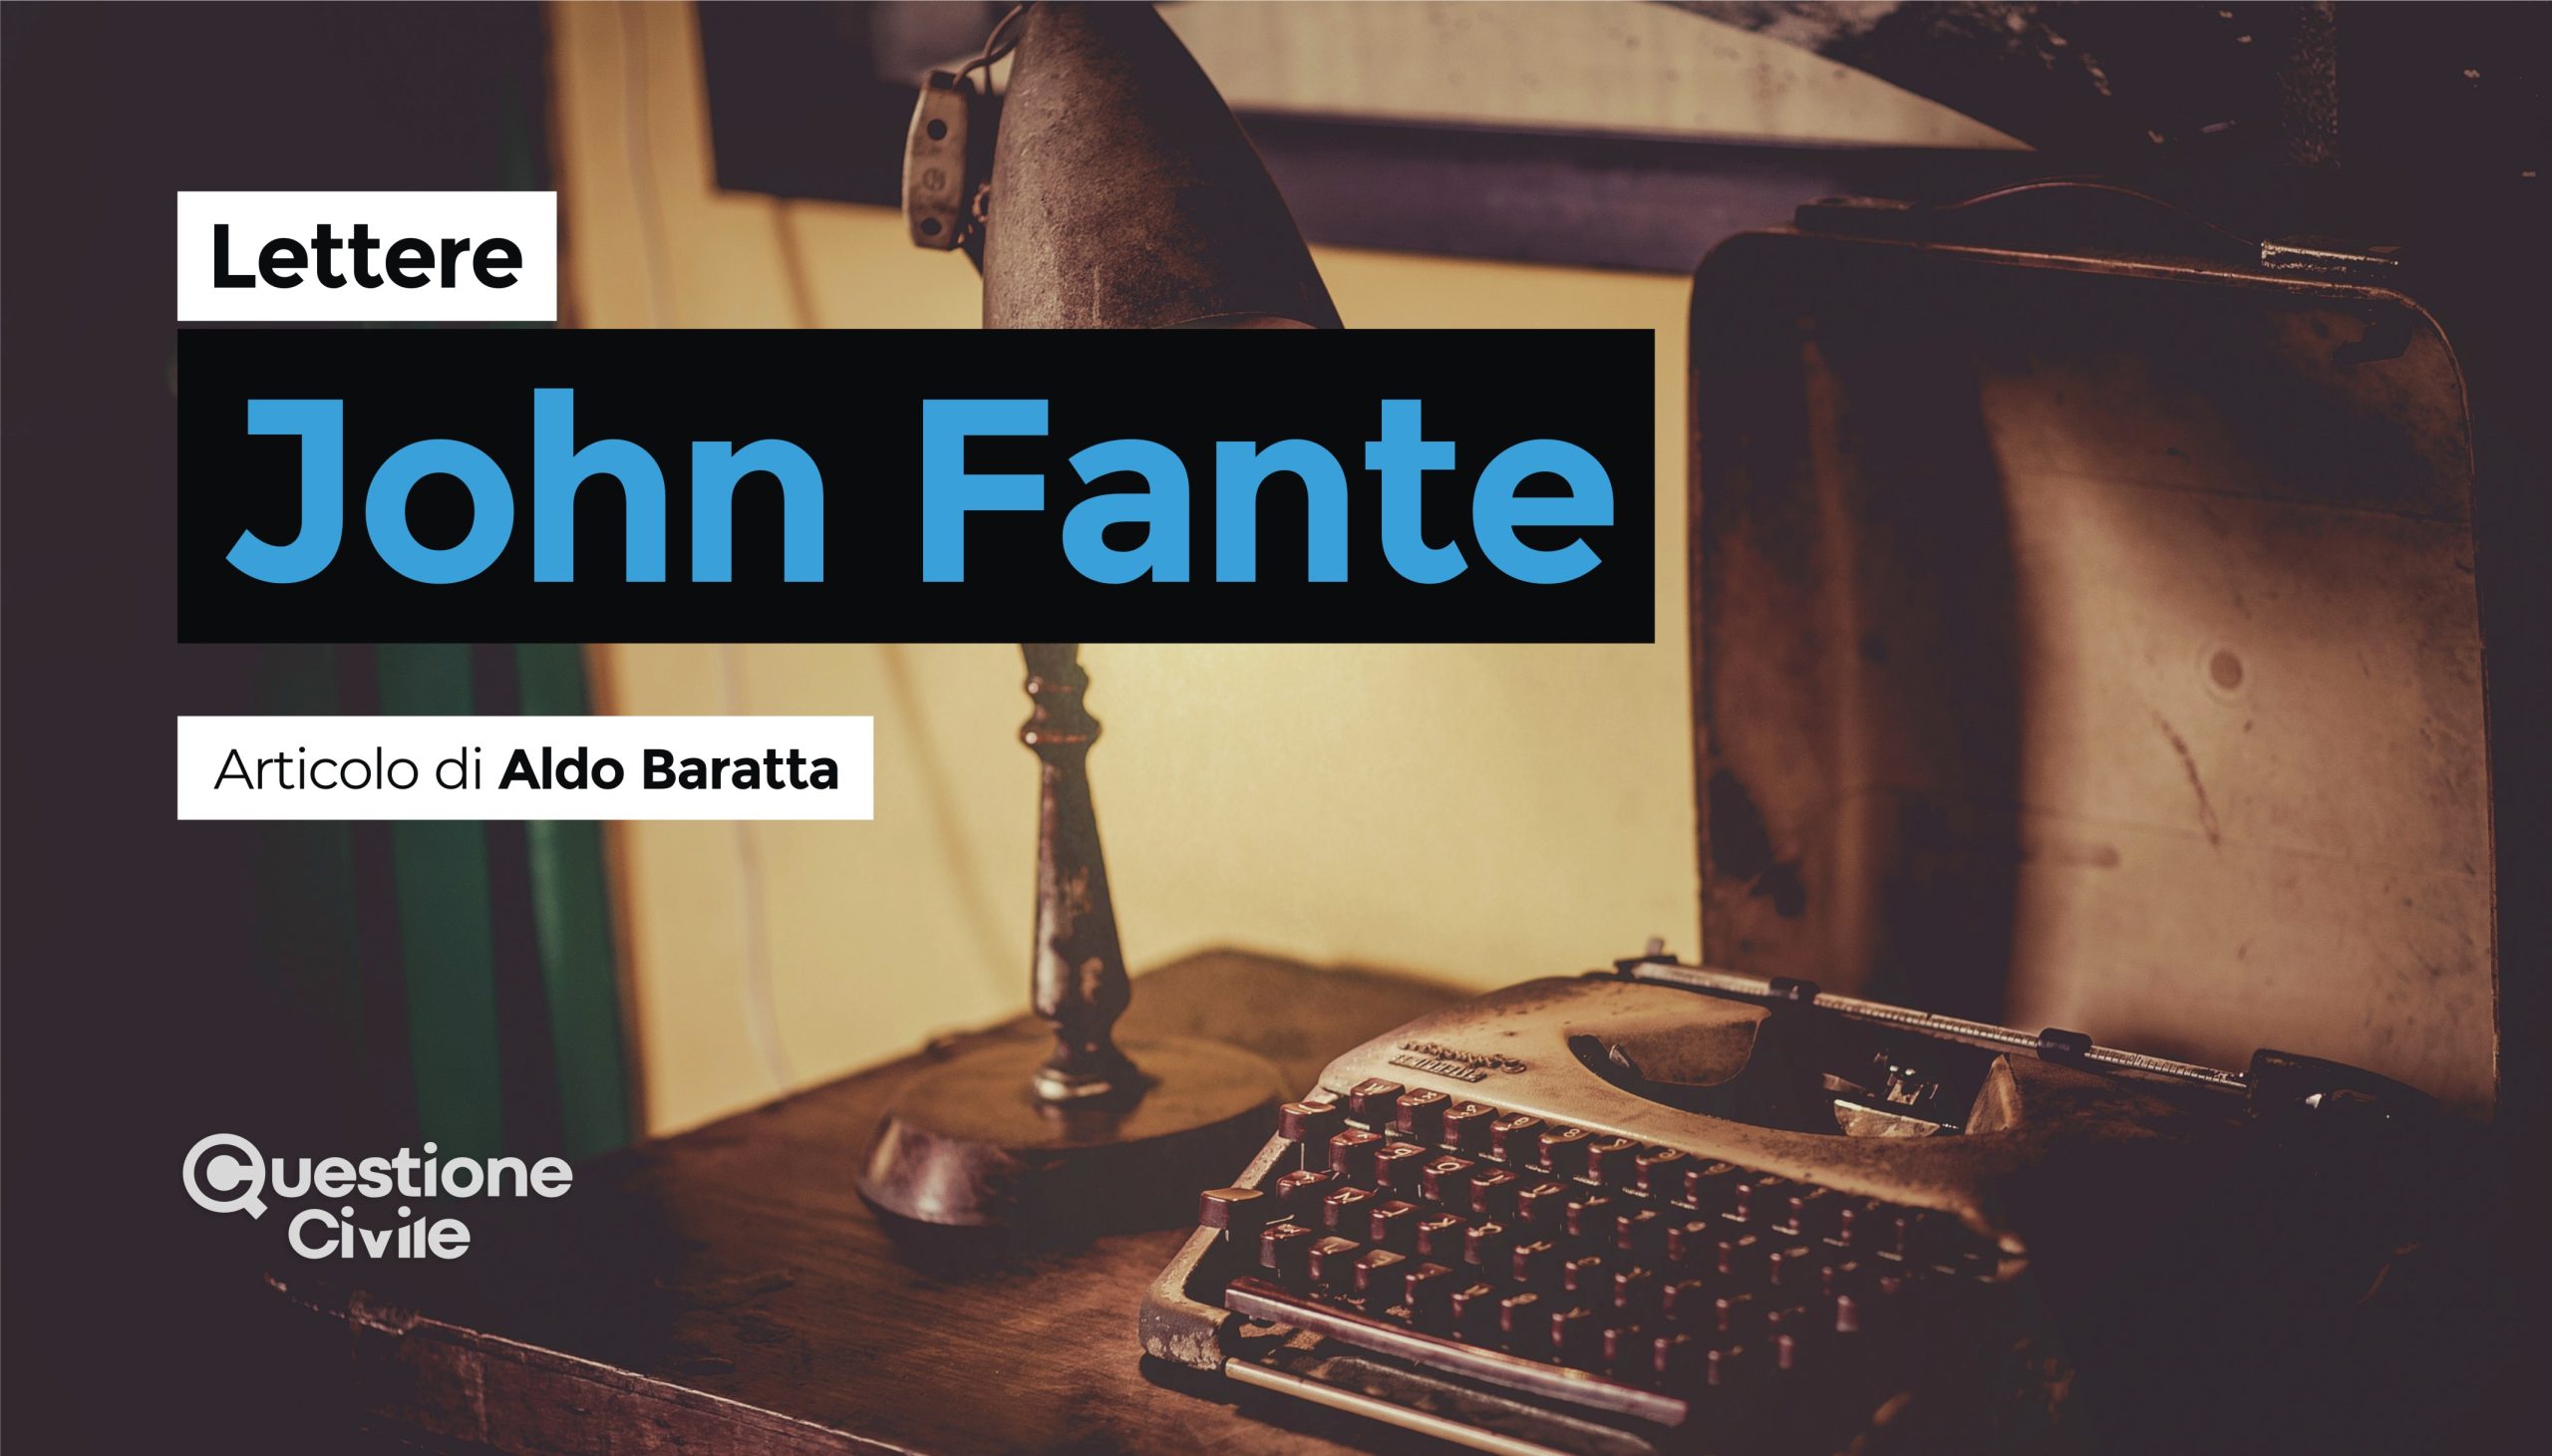 John Fante